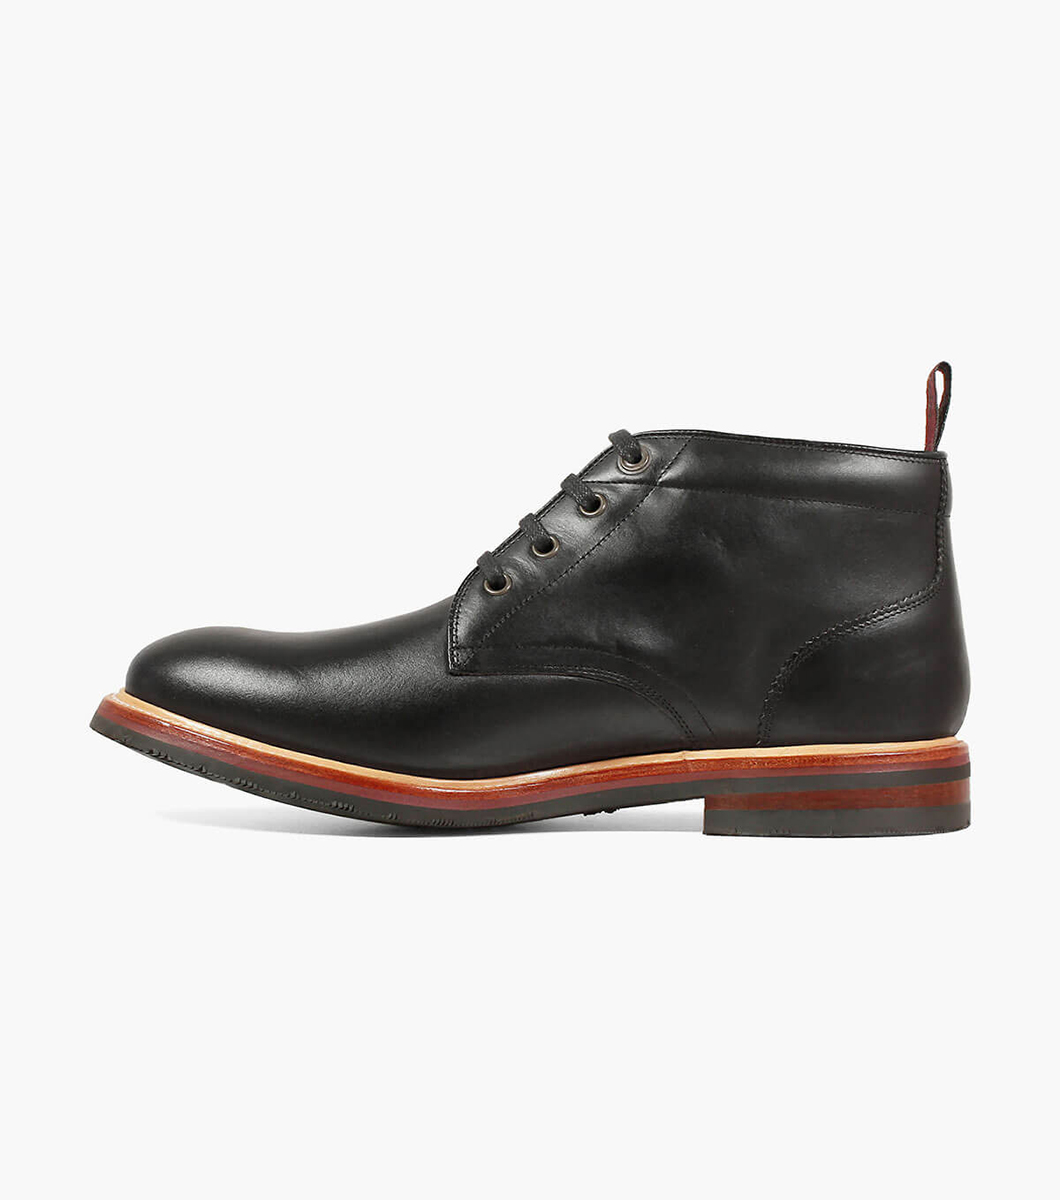 Foundry Plain Toe Chukka Boot Men’s Casual Shoes | Florsheim.com